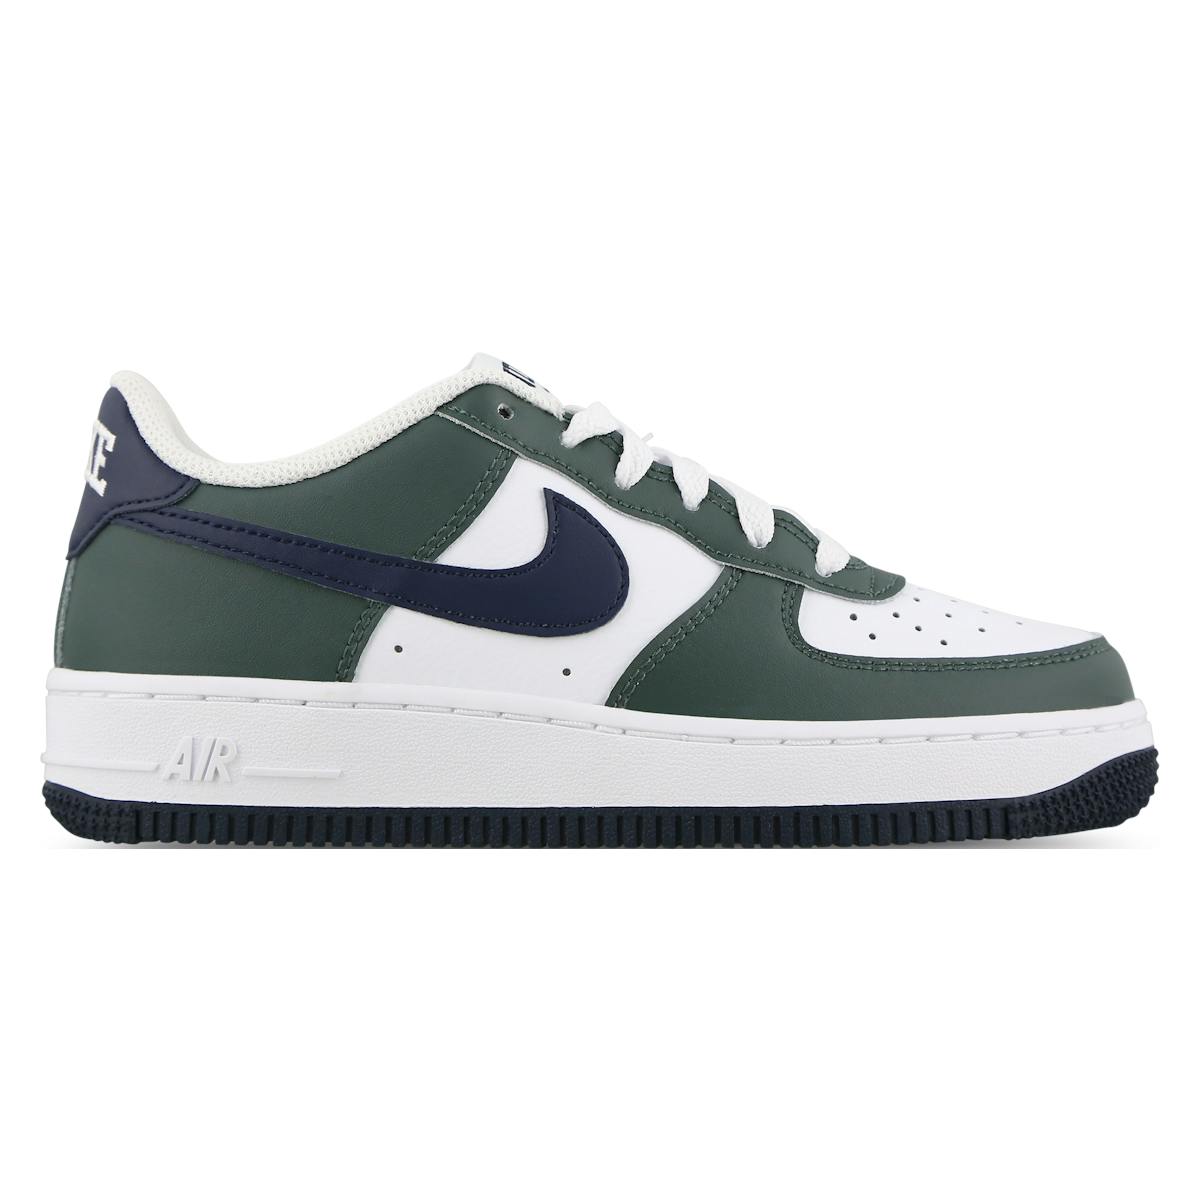 Nike Air Force 1 GS "Vintage Green"